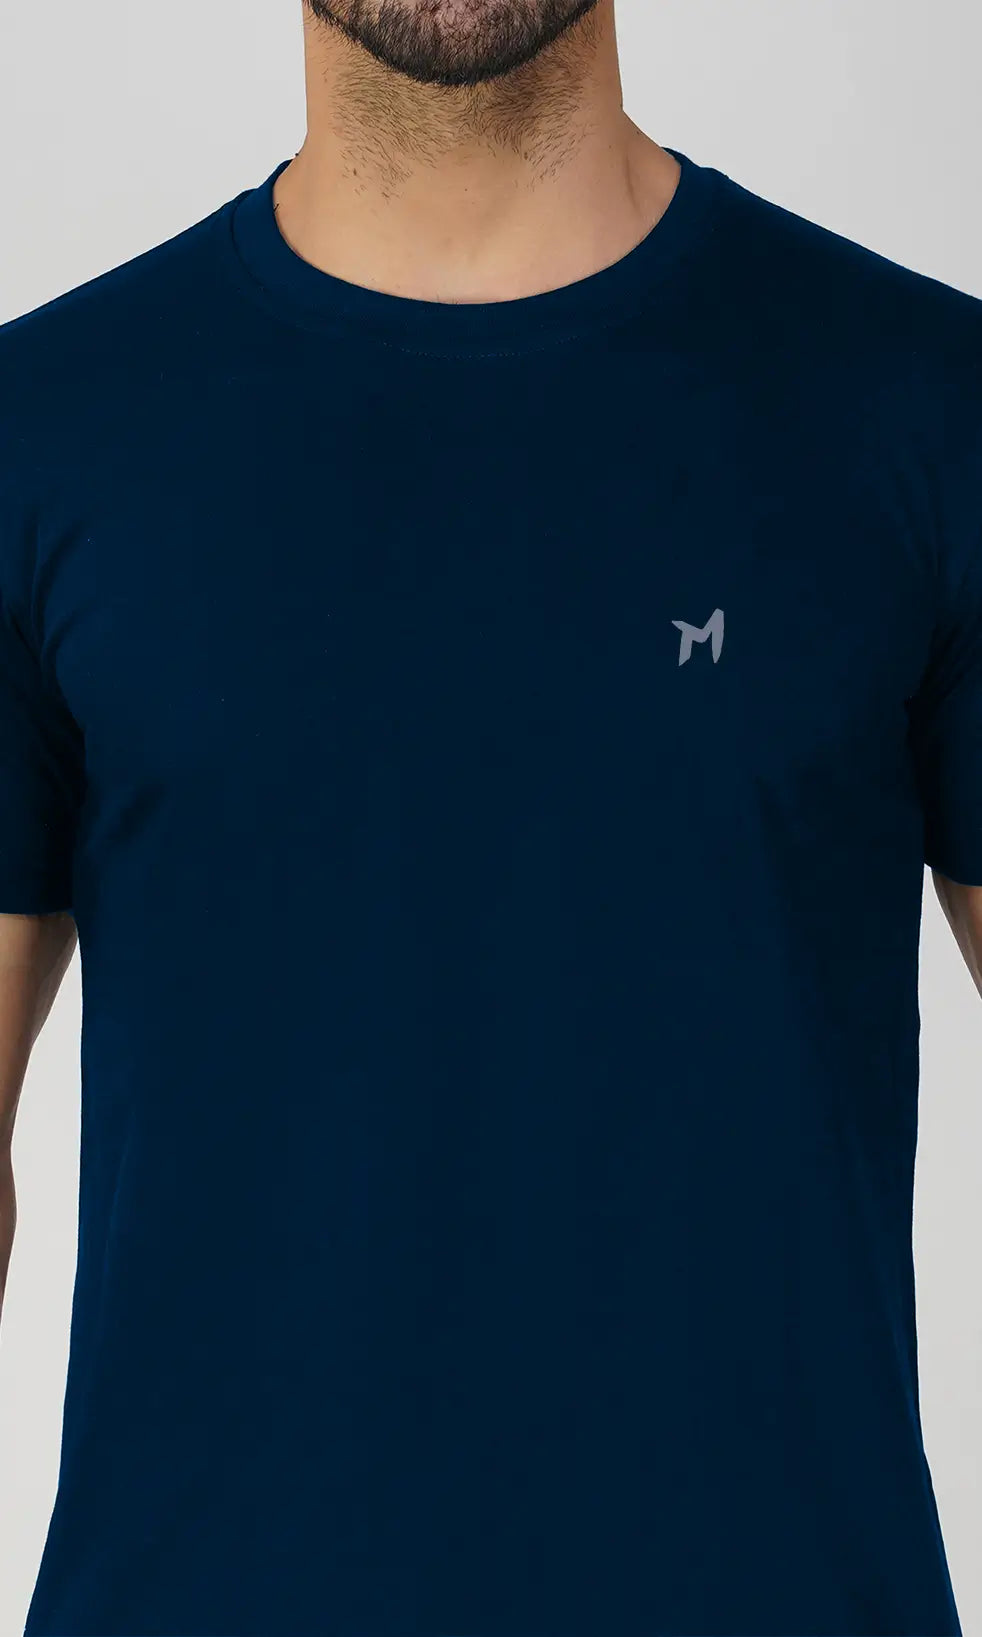 Mebadass Cotton Men's Basic Solid Halfsleeves T-shirts - Navy